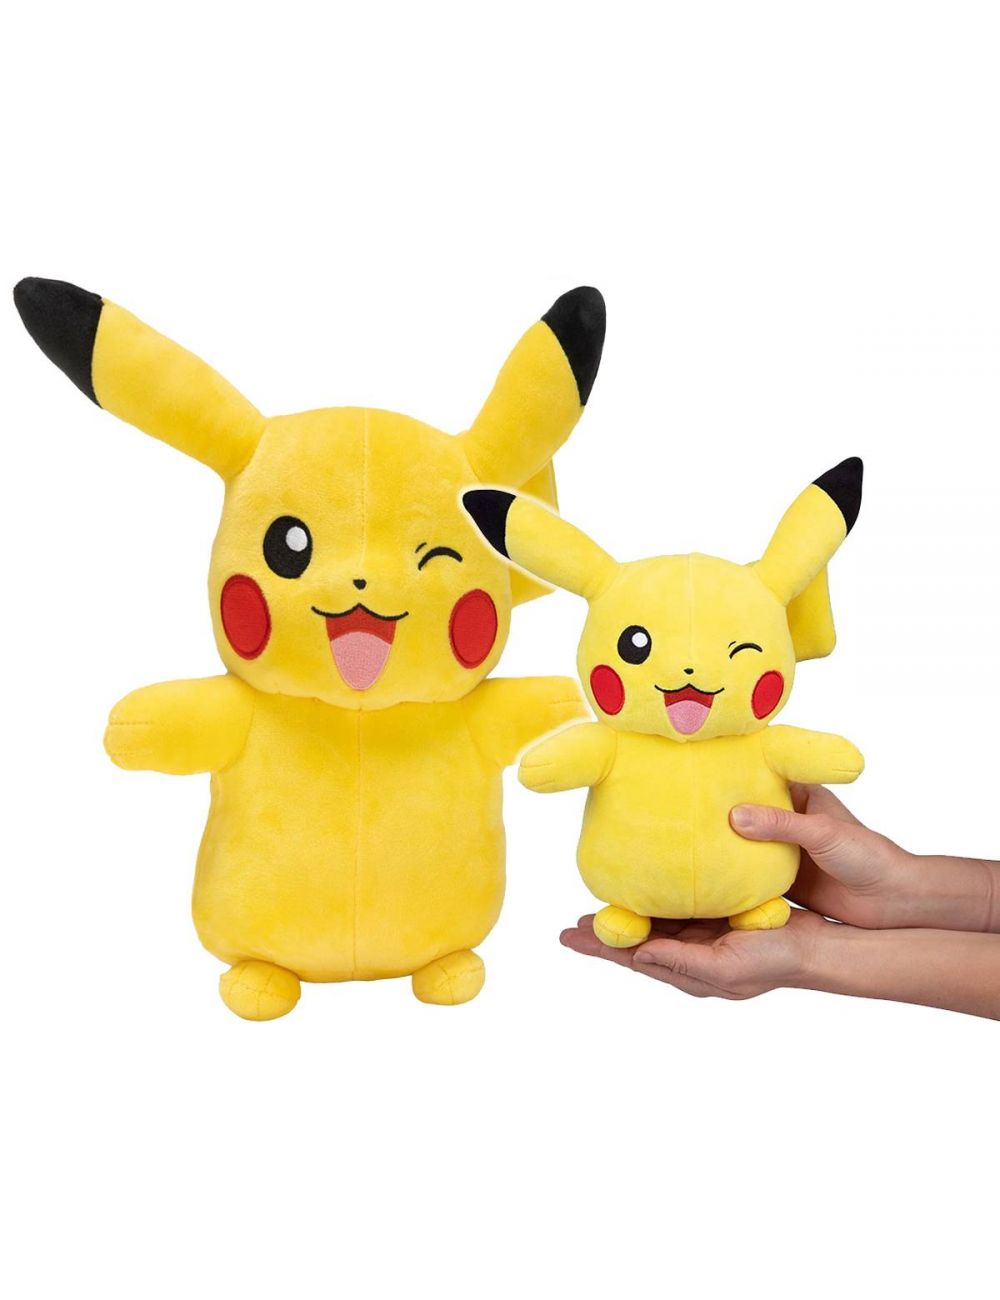 Pokemon Pikachu Pluszowa Maskotka 30cm 97730